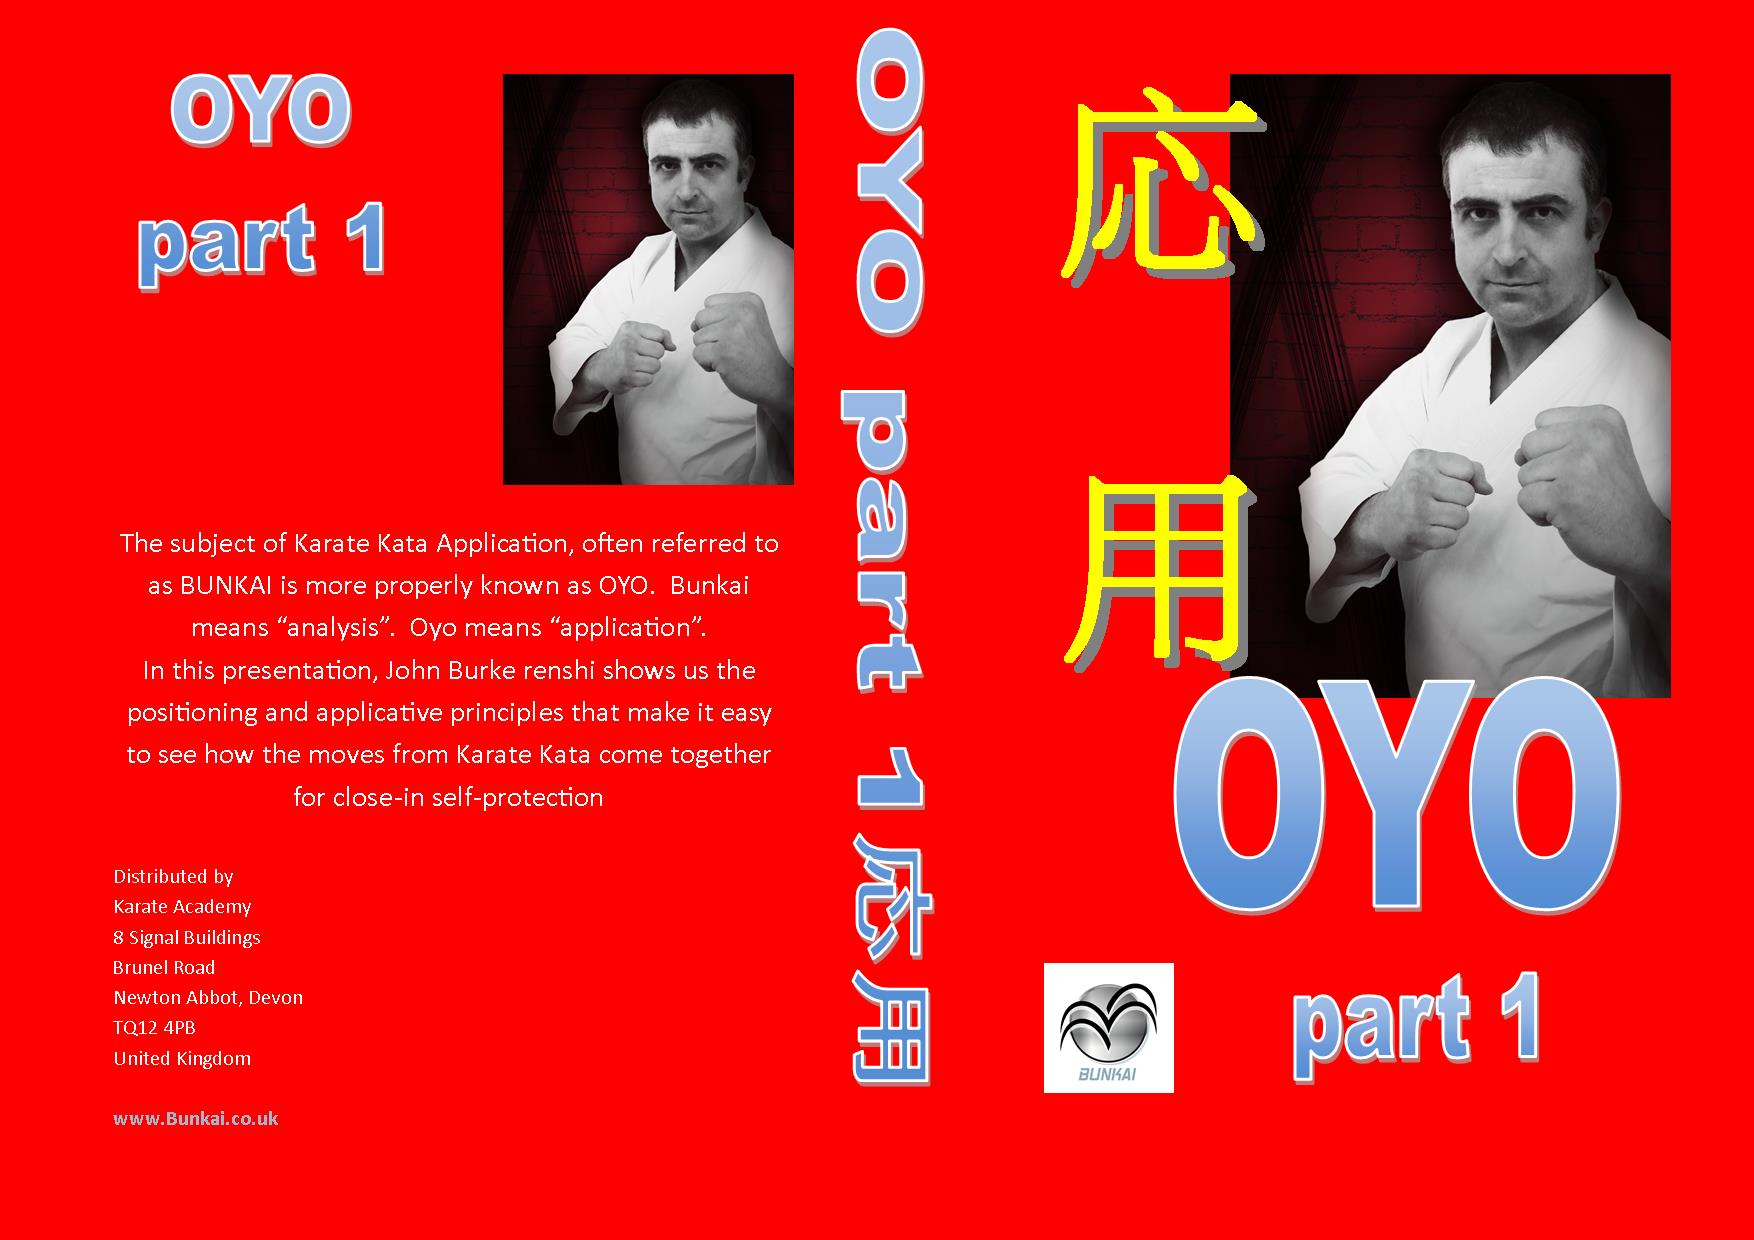 oyo video kata applications